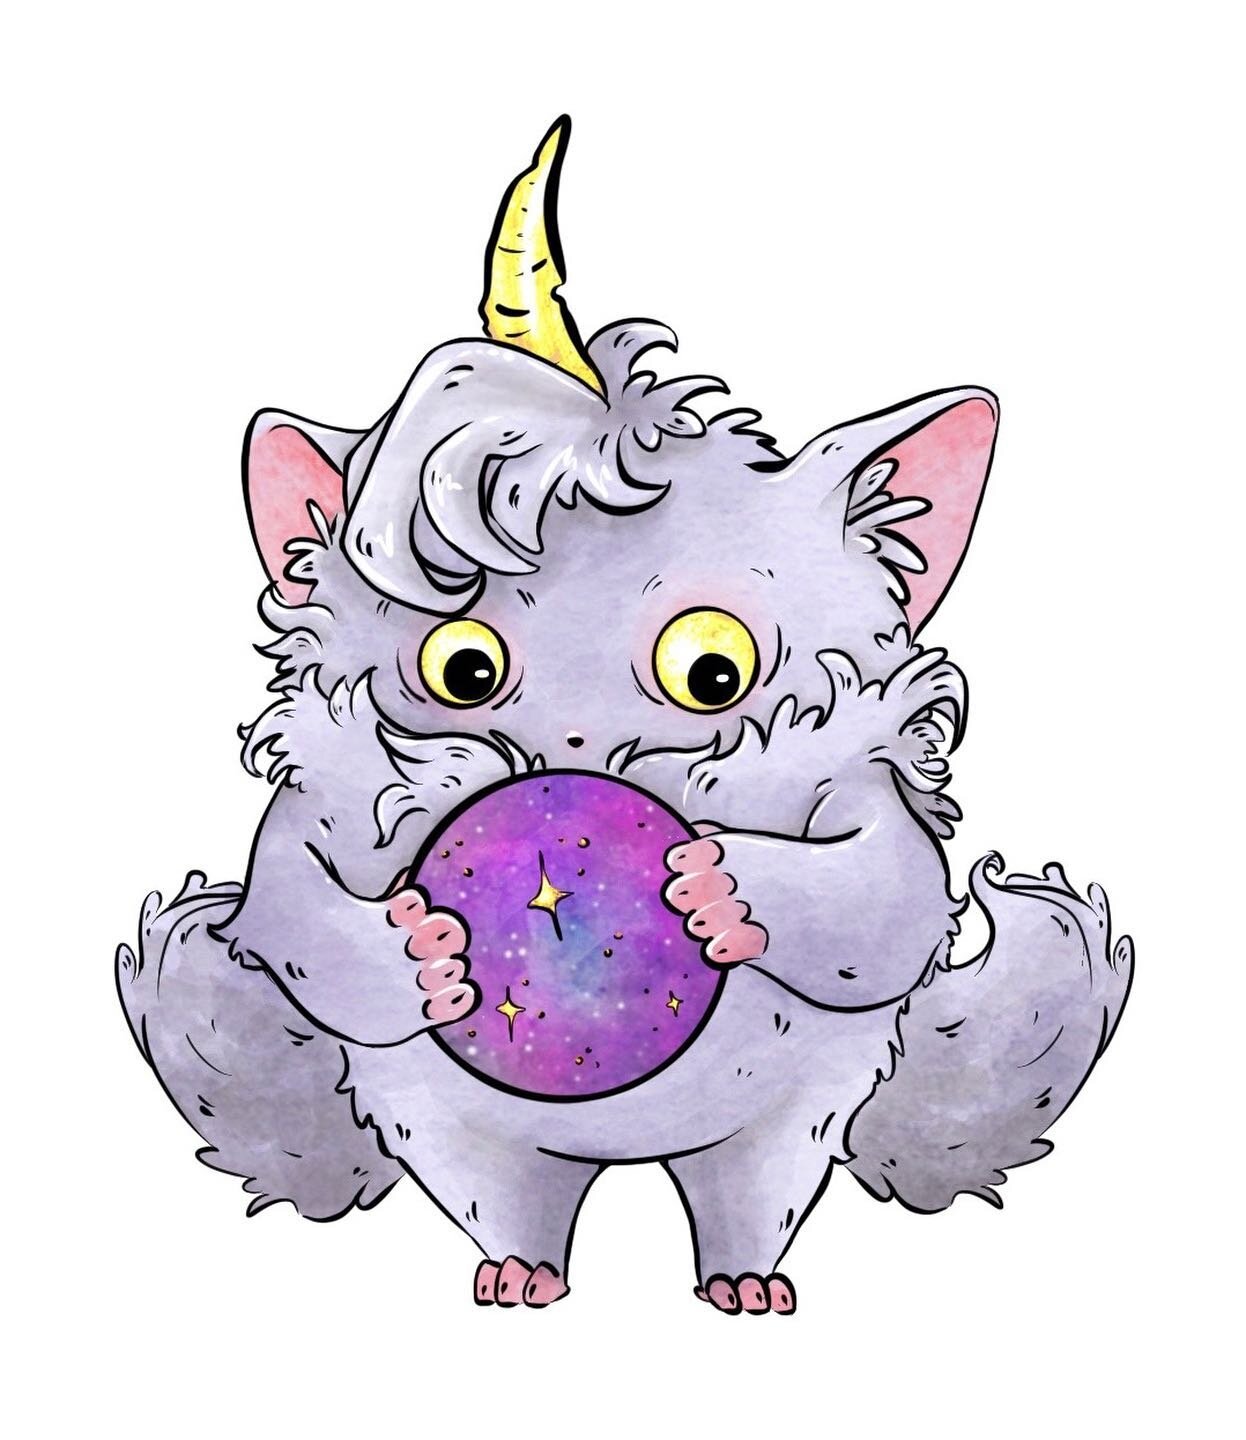 Unicorn fluffy boi with his crystal ball 🔮 

#digitalart #digitalillustration #chinchilla #hybridanimal #unicorncreature #unicorn #skrzyniaart #thewickedwitchart #polishartist #magicalcreatures #crystalball #lemur